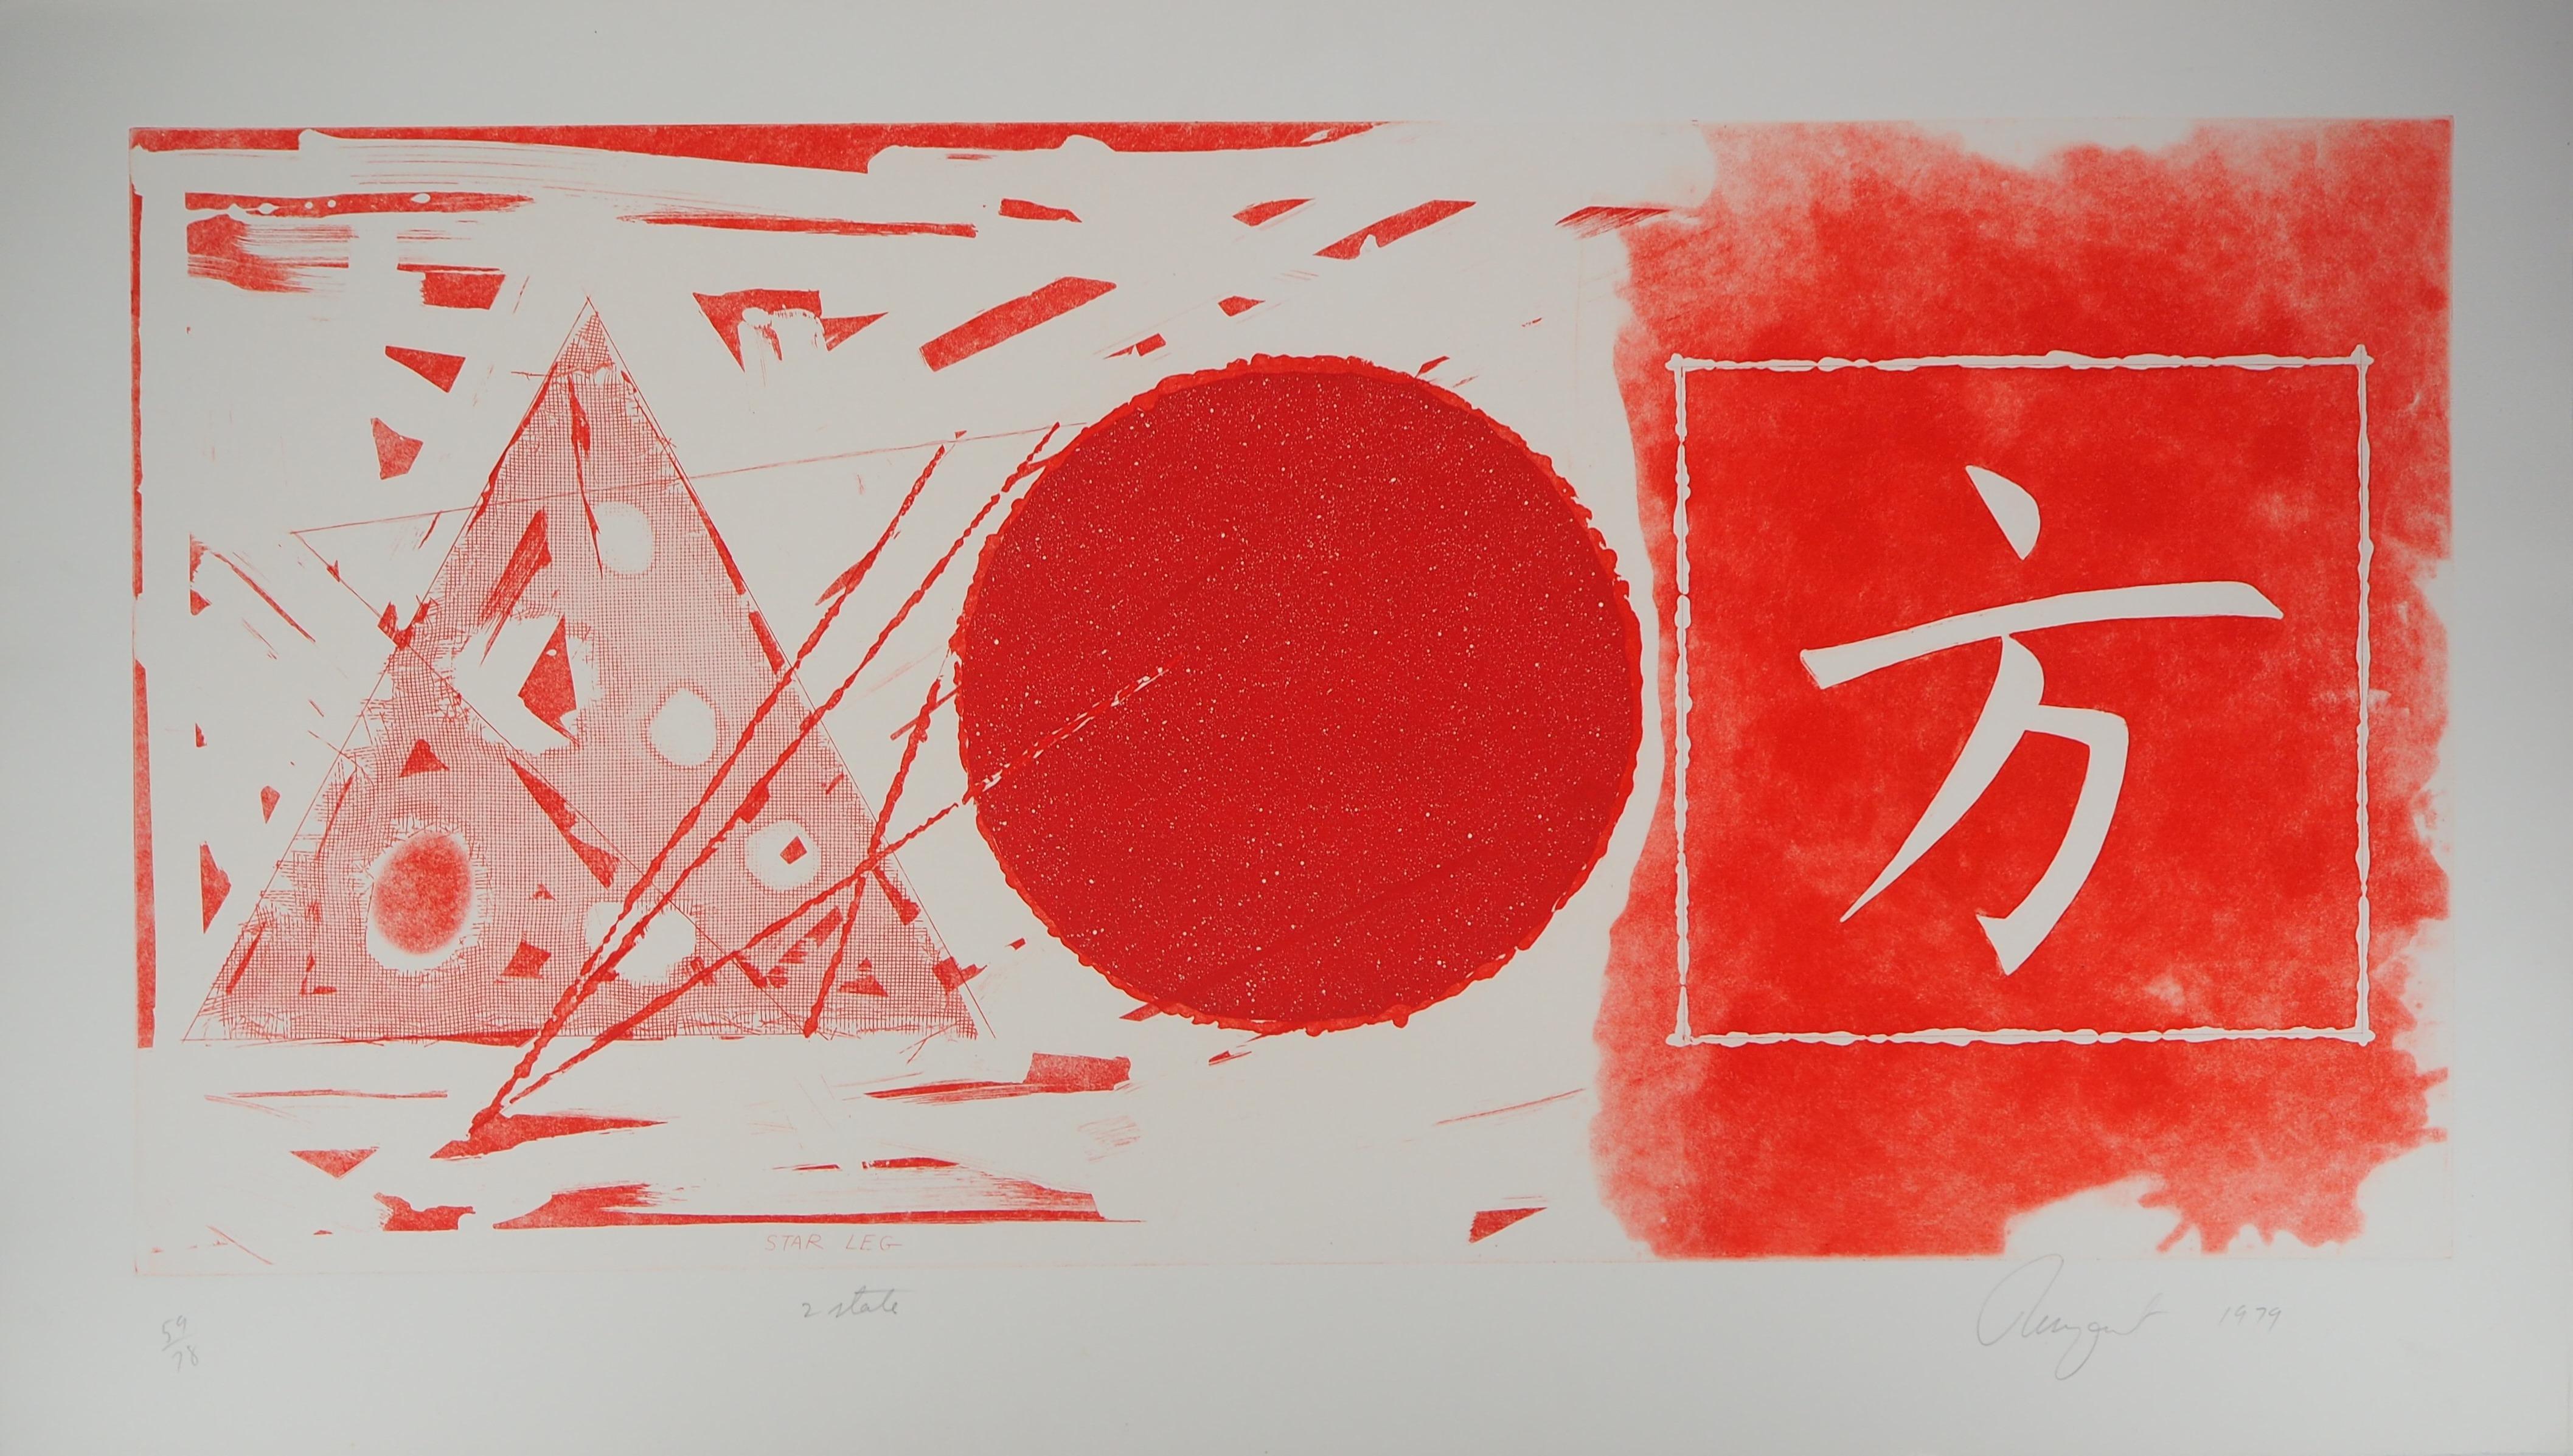 James Rosenquist Abstract Print - Symbols, Star Leg - Original Etching and Aquatint, Handsigned 